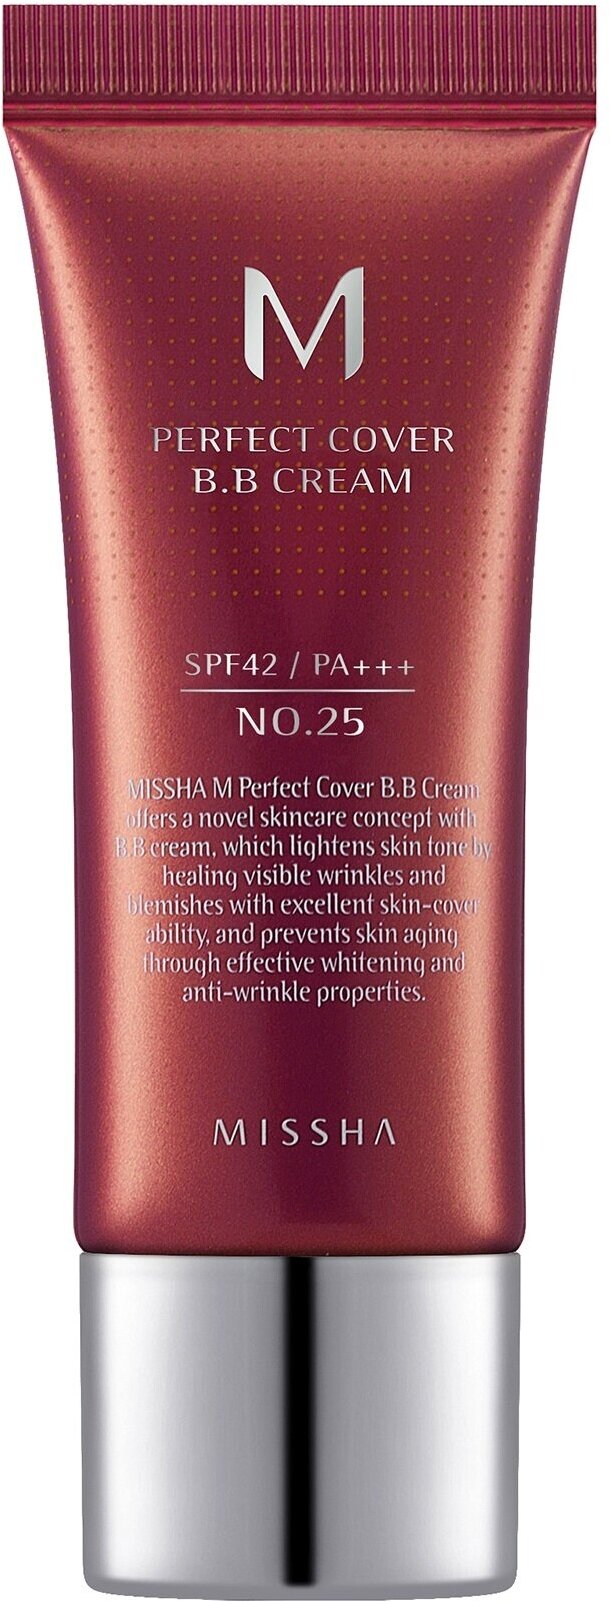 Тональный крем MISSHA M Perfect Cover BB Cream SPF42/PA+++ (No.25/Warm Beige), 20 мл